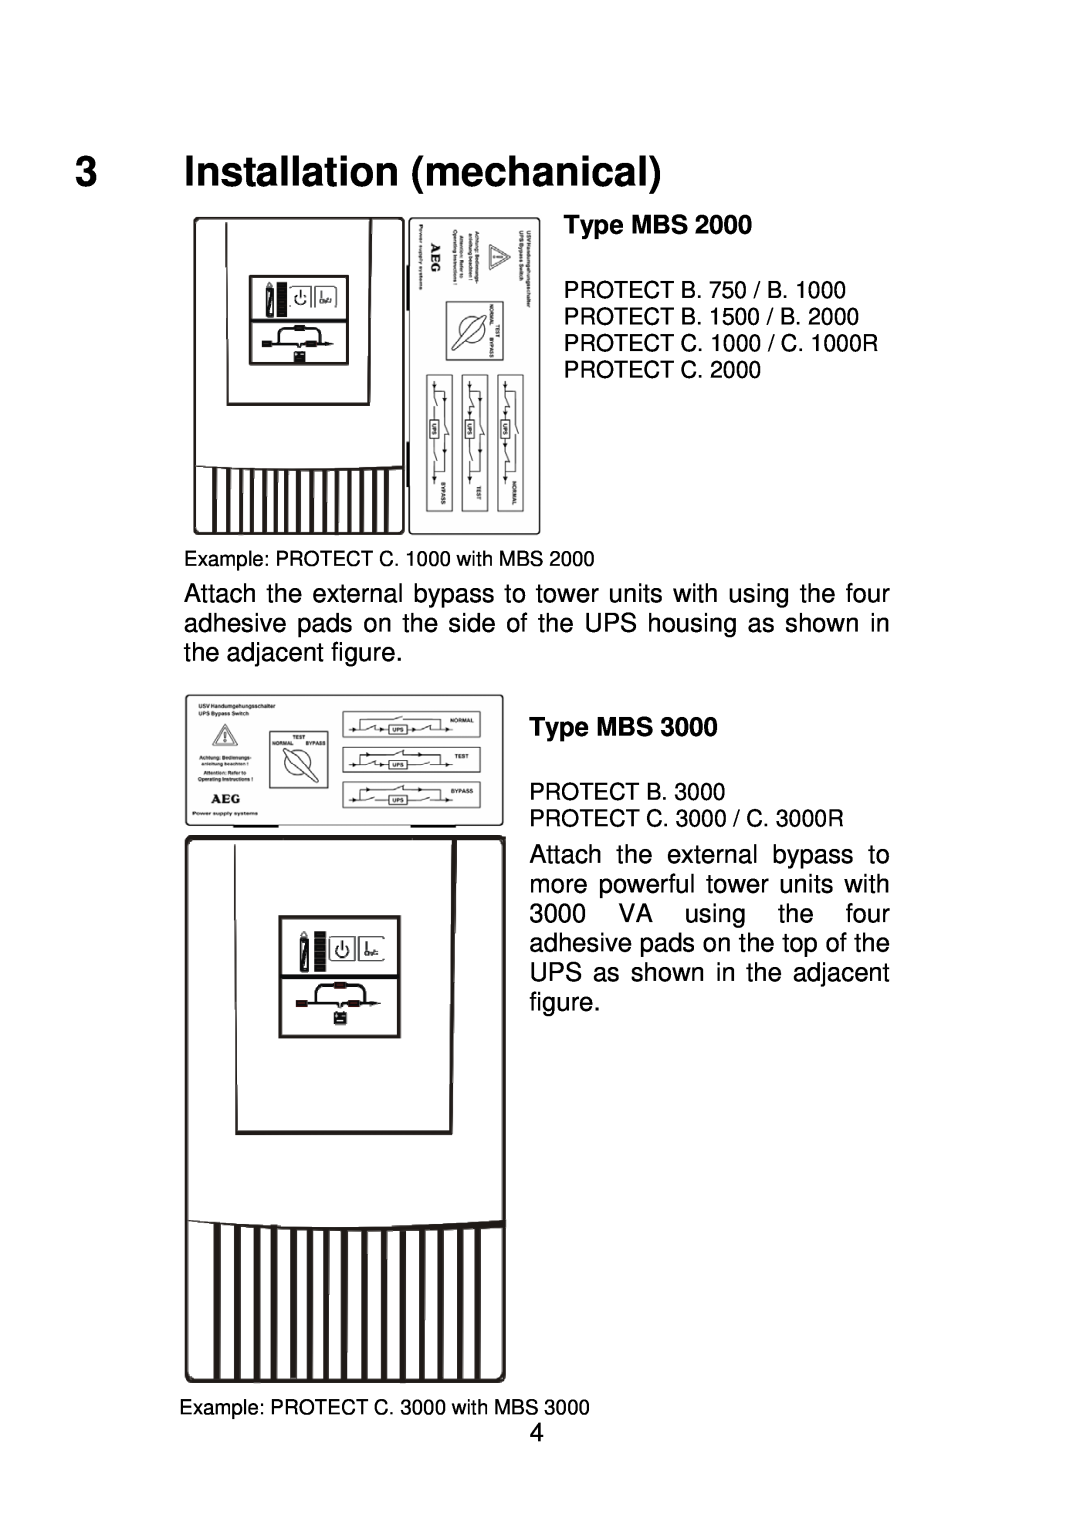 AEG MBS 2000 manual Installation mechanical, Type MBS, PROTECT B. 750 / B PROTECT B. 1500 / B PROTECT C. 1000 / C. 1000R 